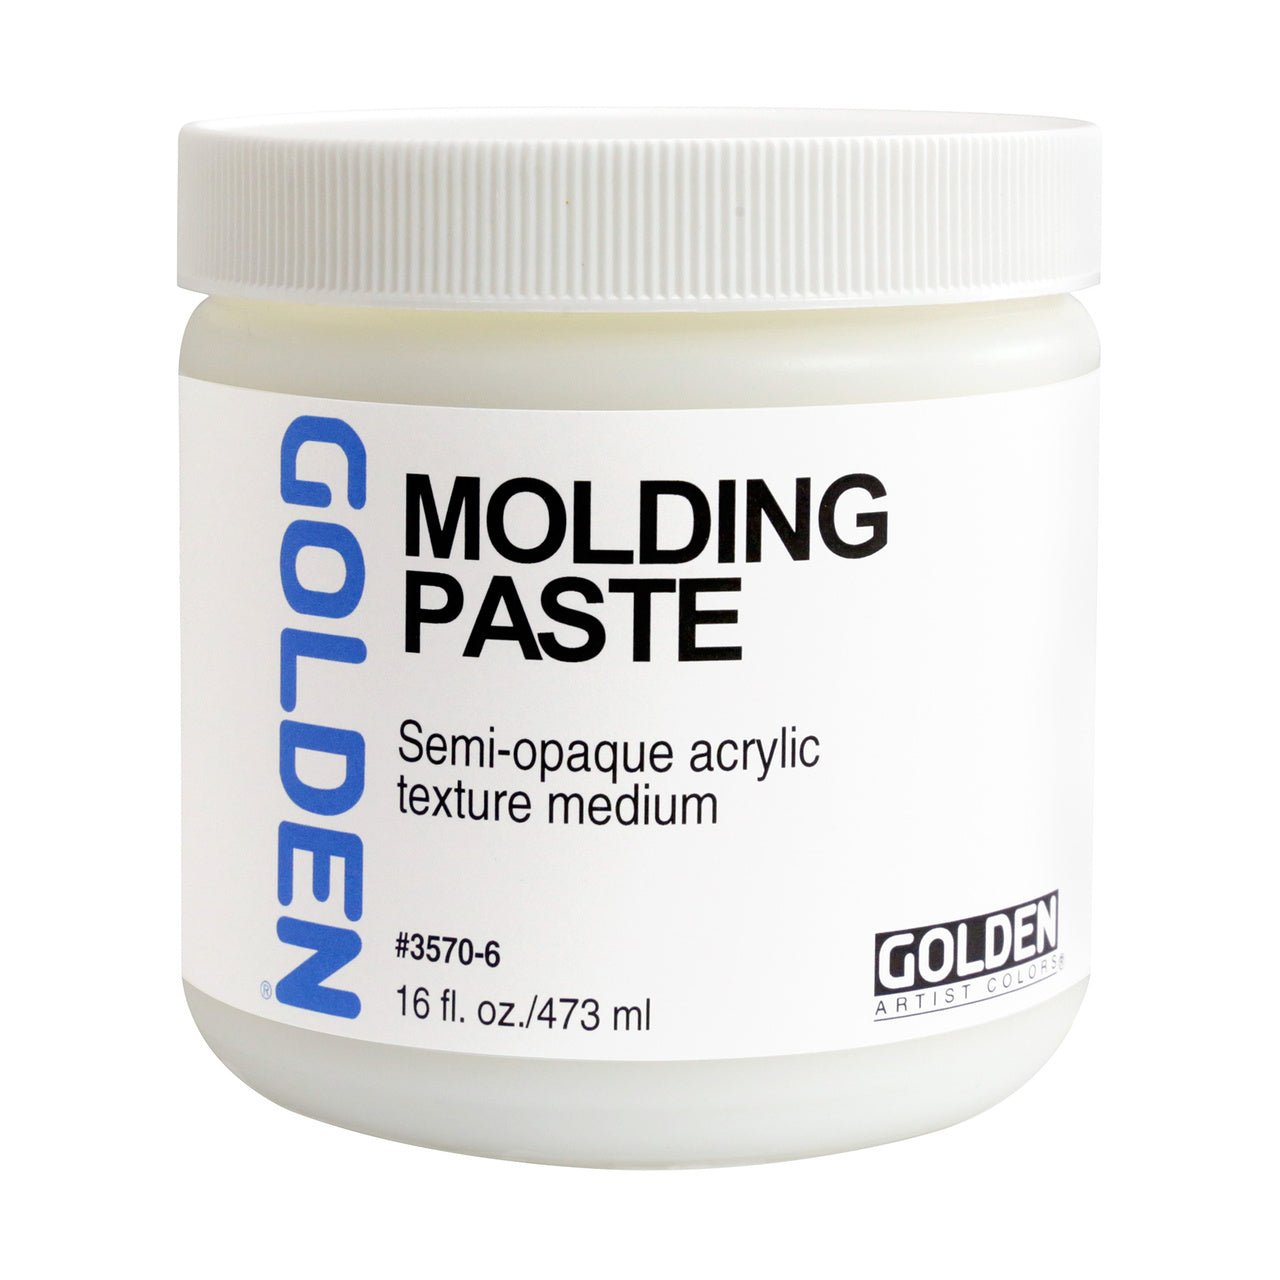 Golden Molding Paste 16 oz - merriartist.com